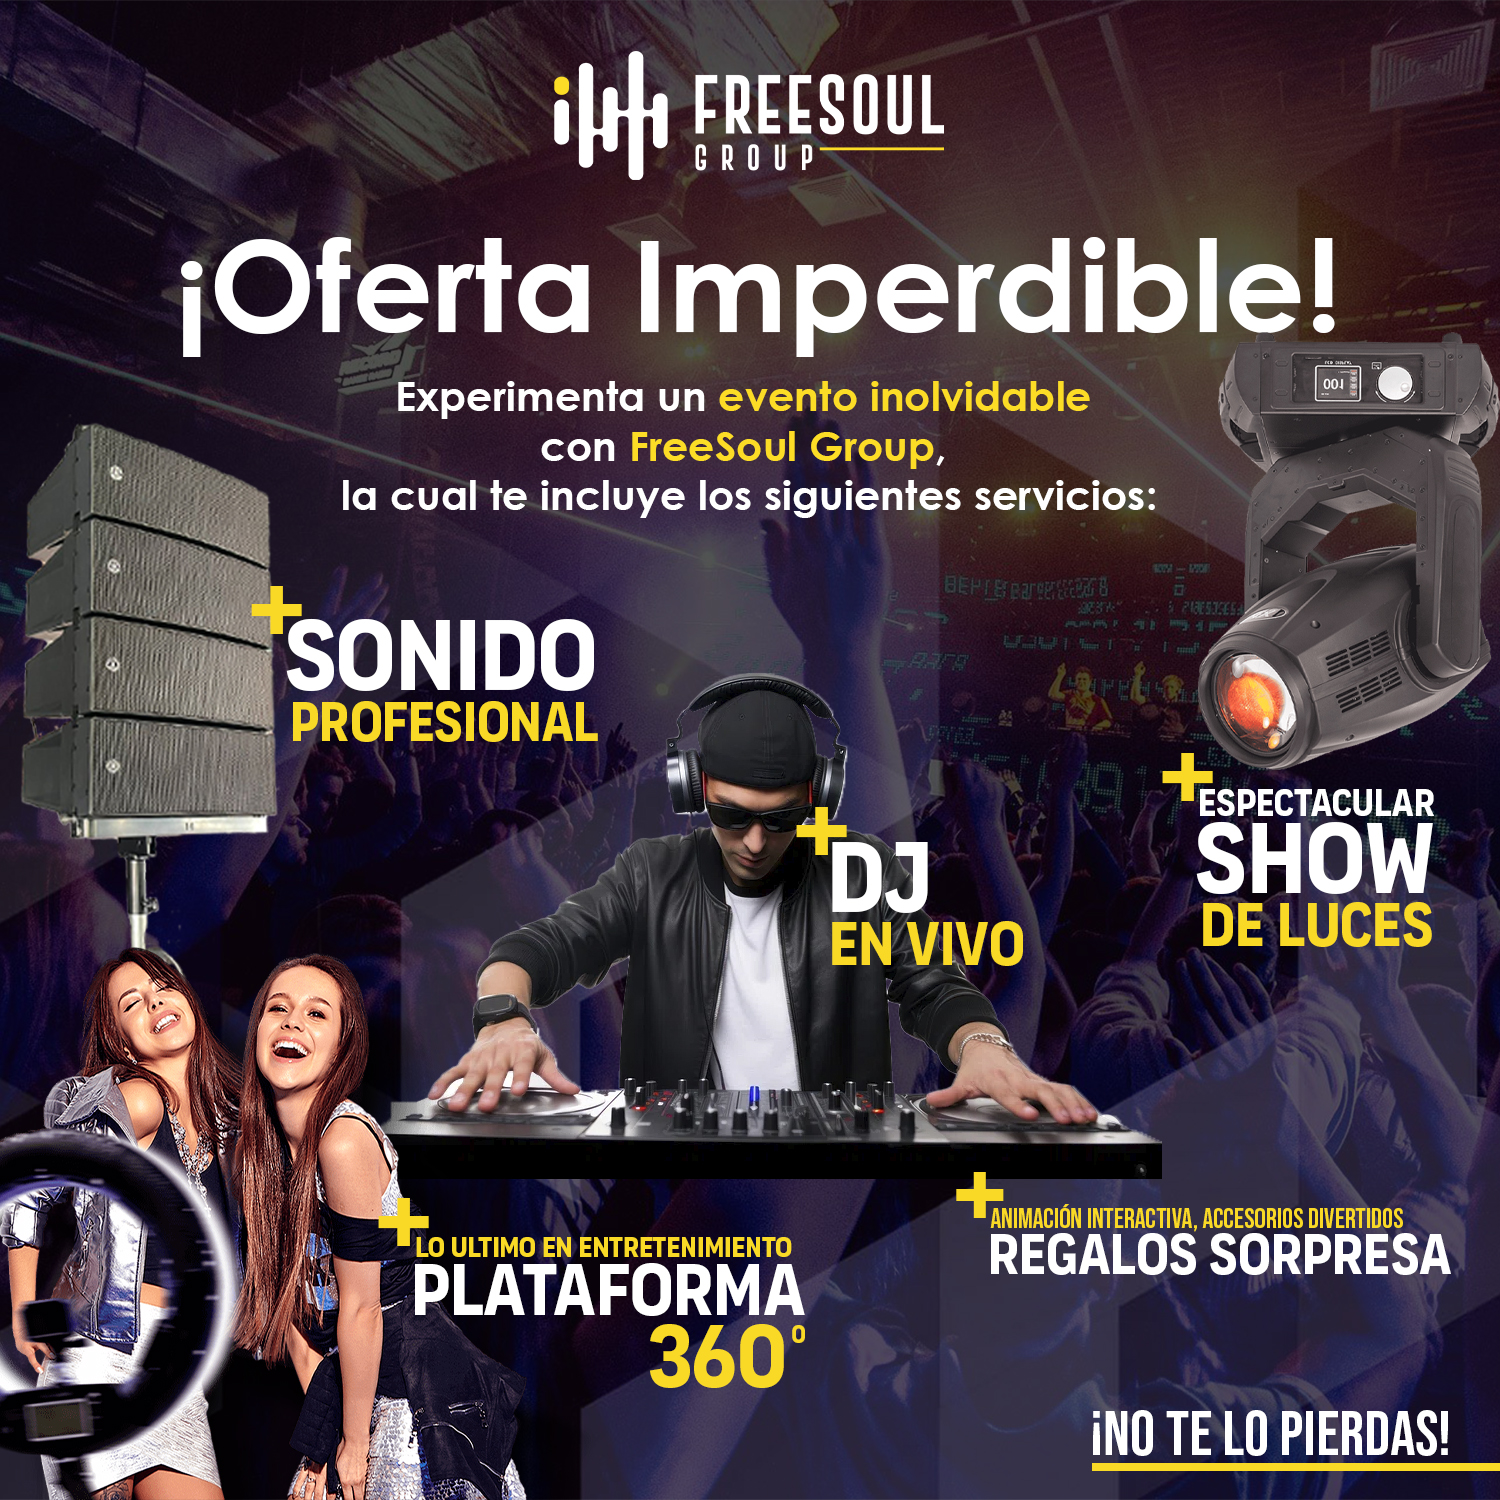 Oferta Imperdible - SONIDO +DJ +LUCES +360 +SORPRESAS